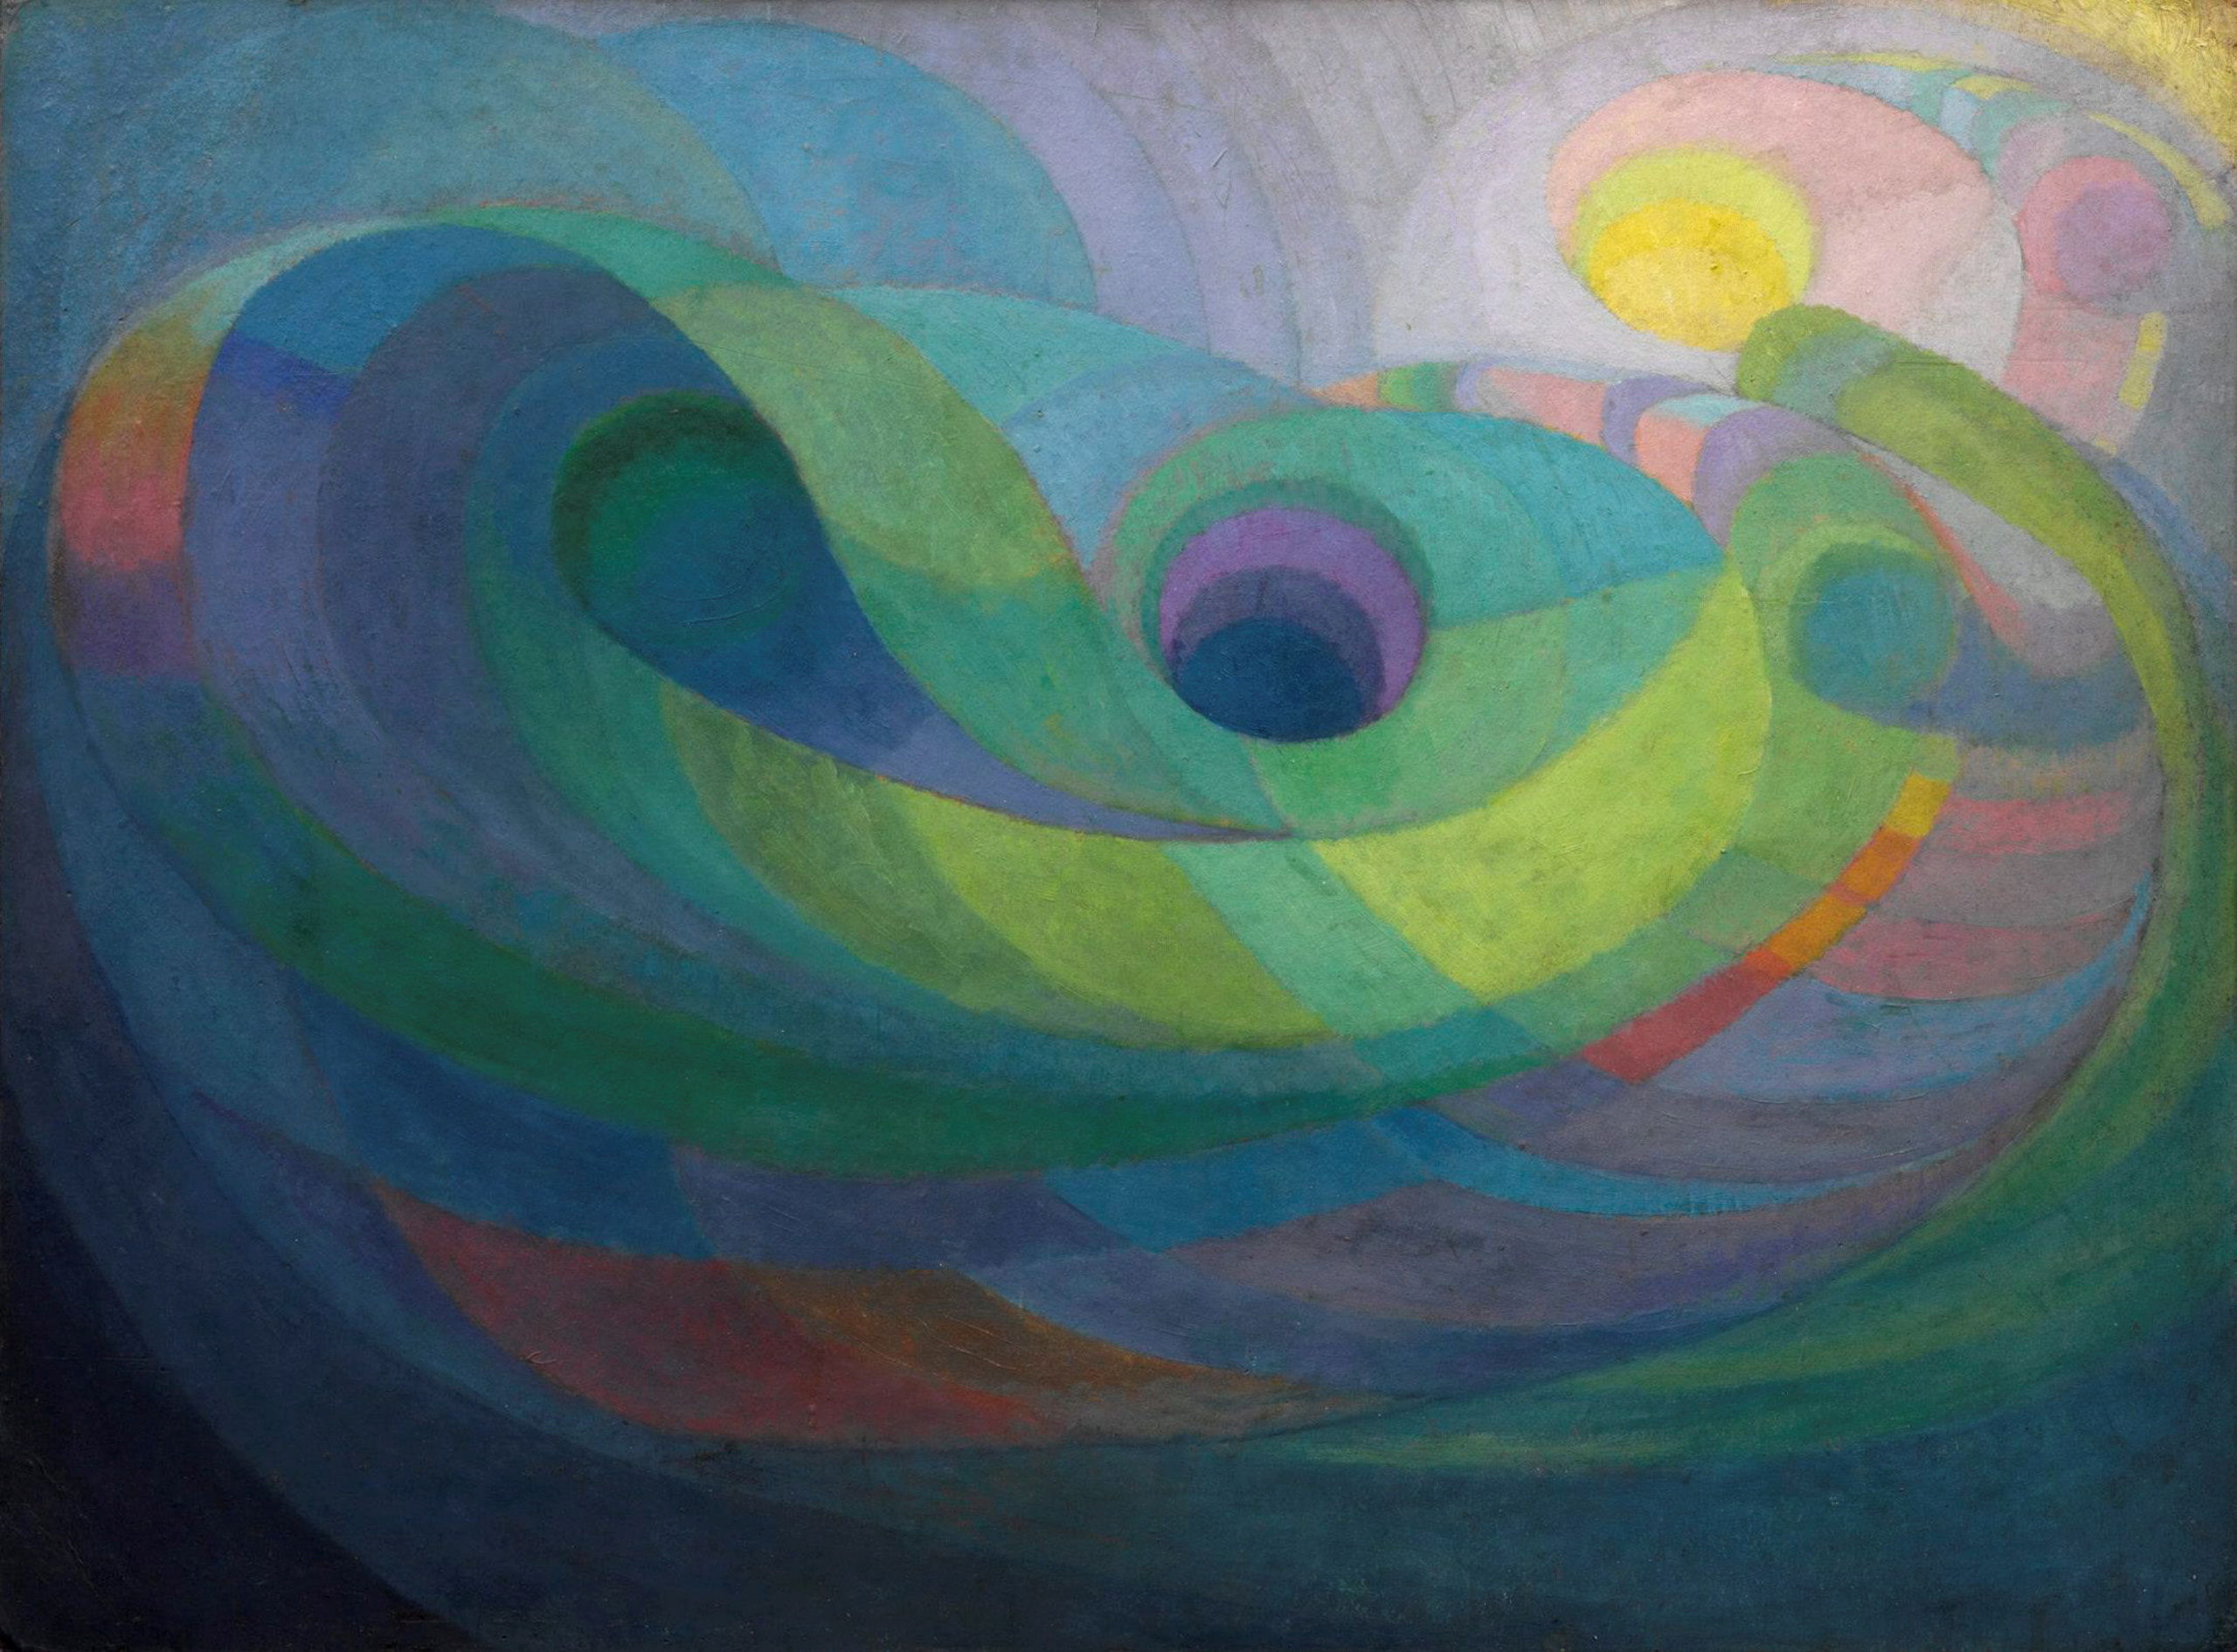 Roy de Maistre, Rhythmic composition in yellow green minor, 1919